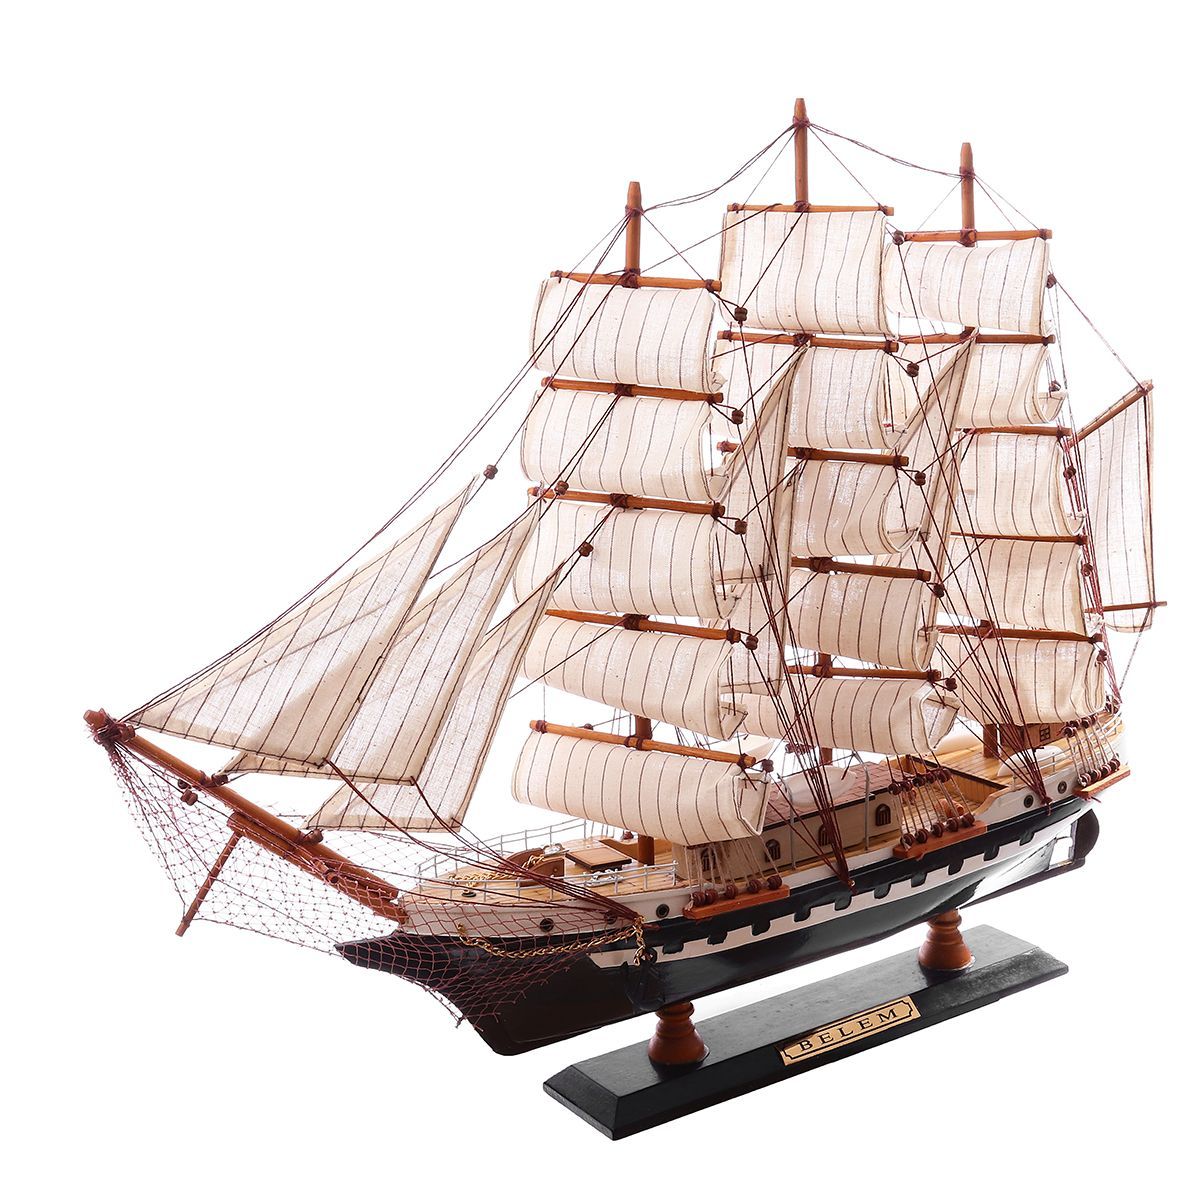 48cm-Wooden-Sailboat-Ship-Model-Building-Sailing-Ship-Display-Scale-Boat-Decor-1563195